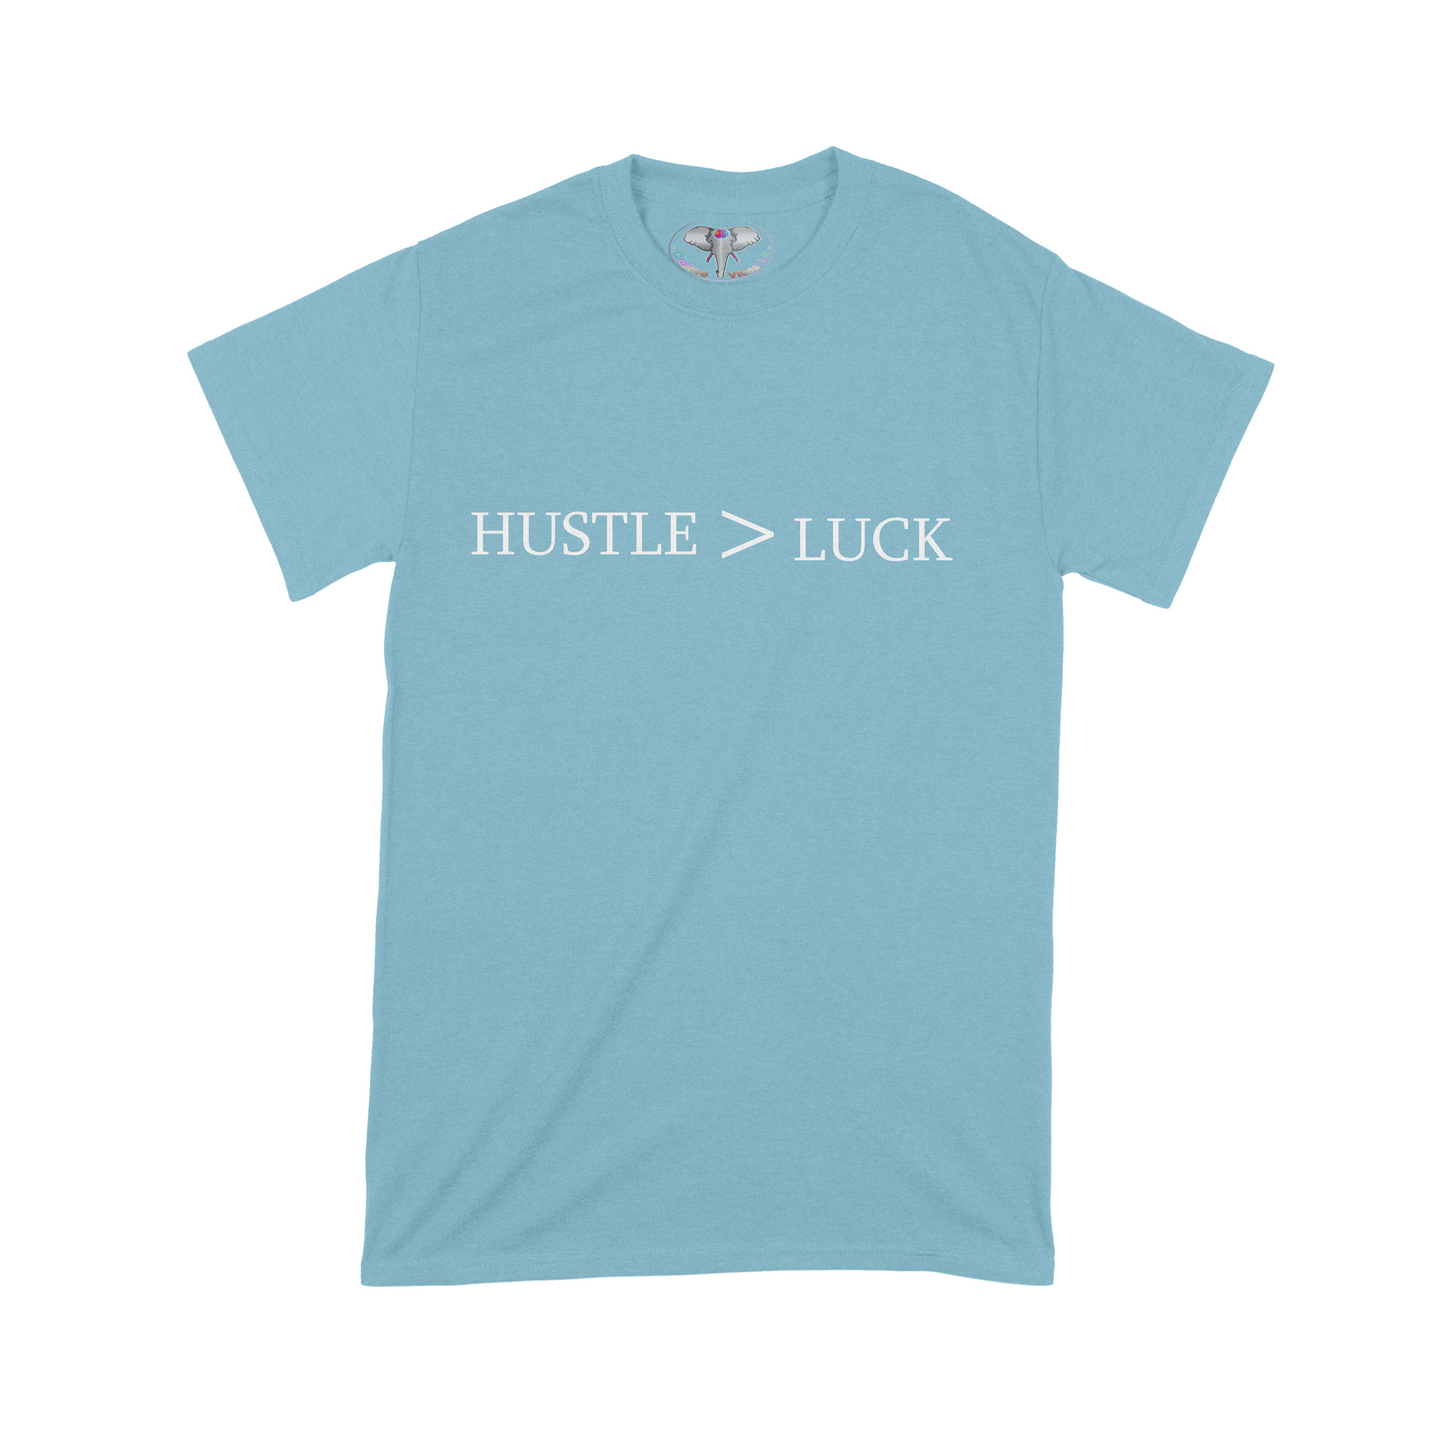 Hustle > Luck Graphic T-shirt